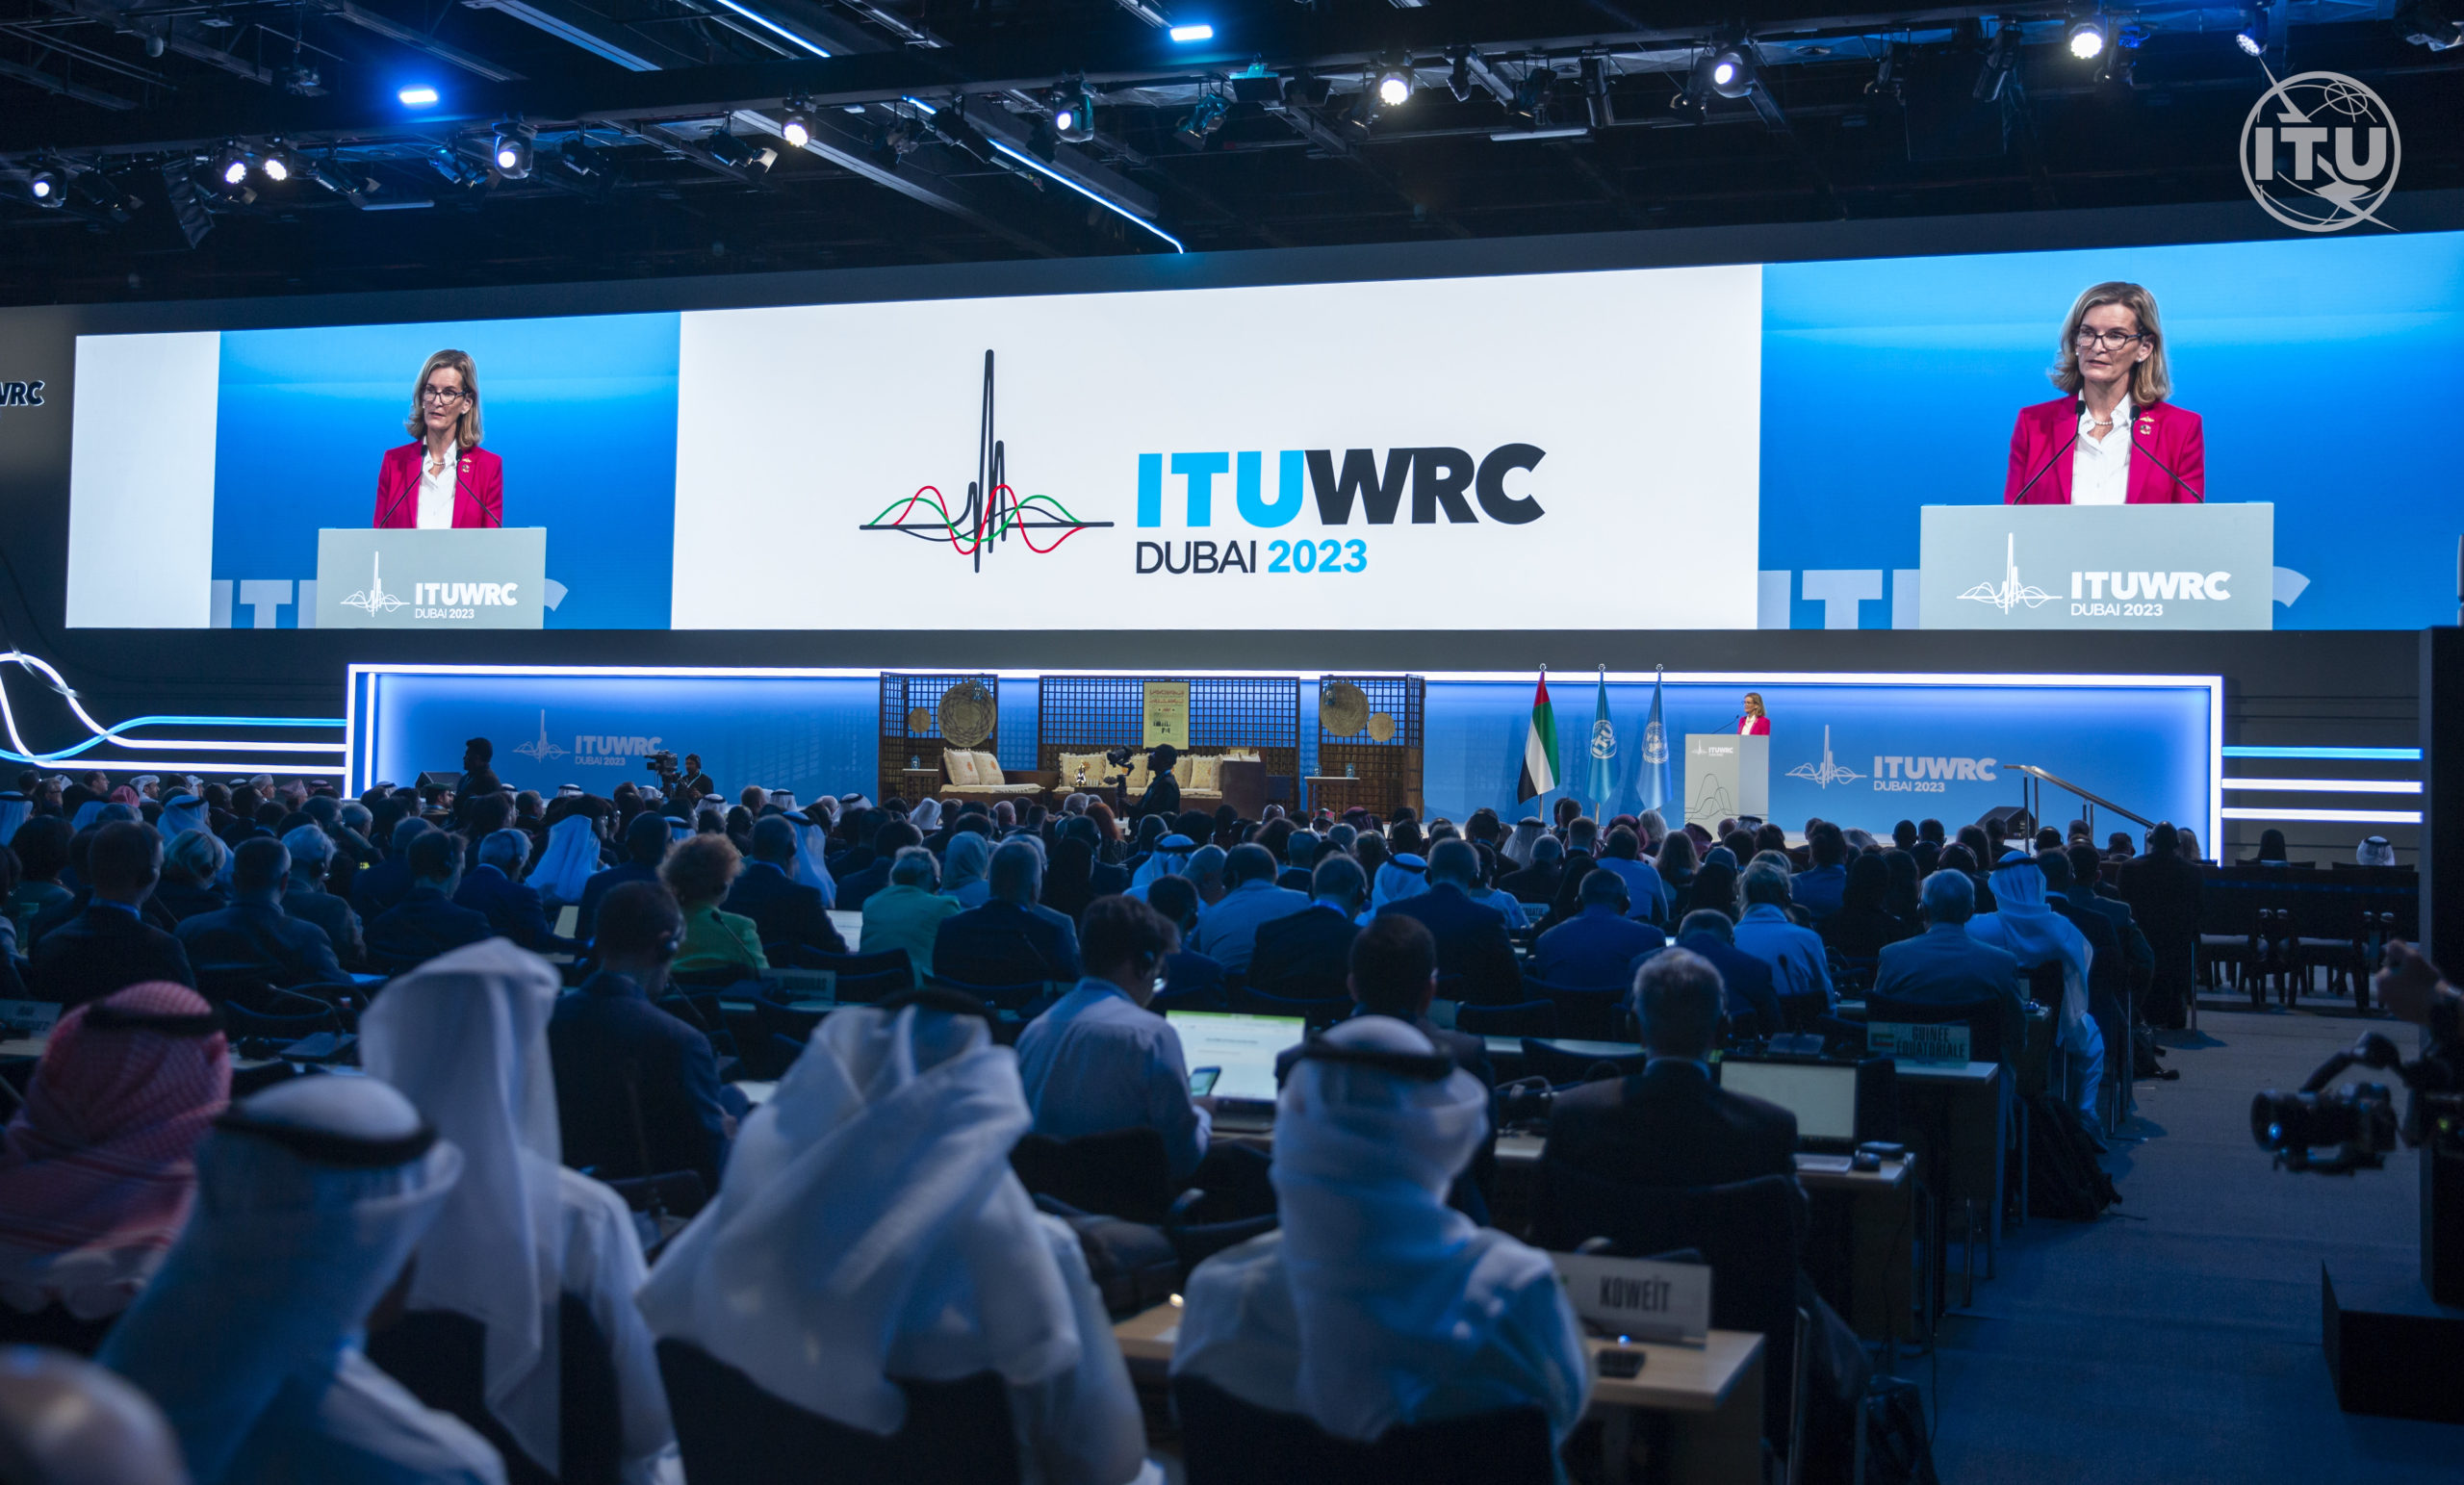 Secretary General of ITU on stage at WRC in Dubai